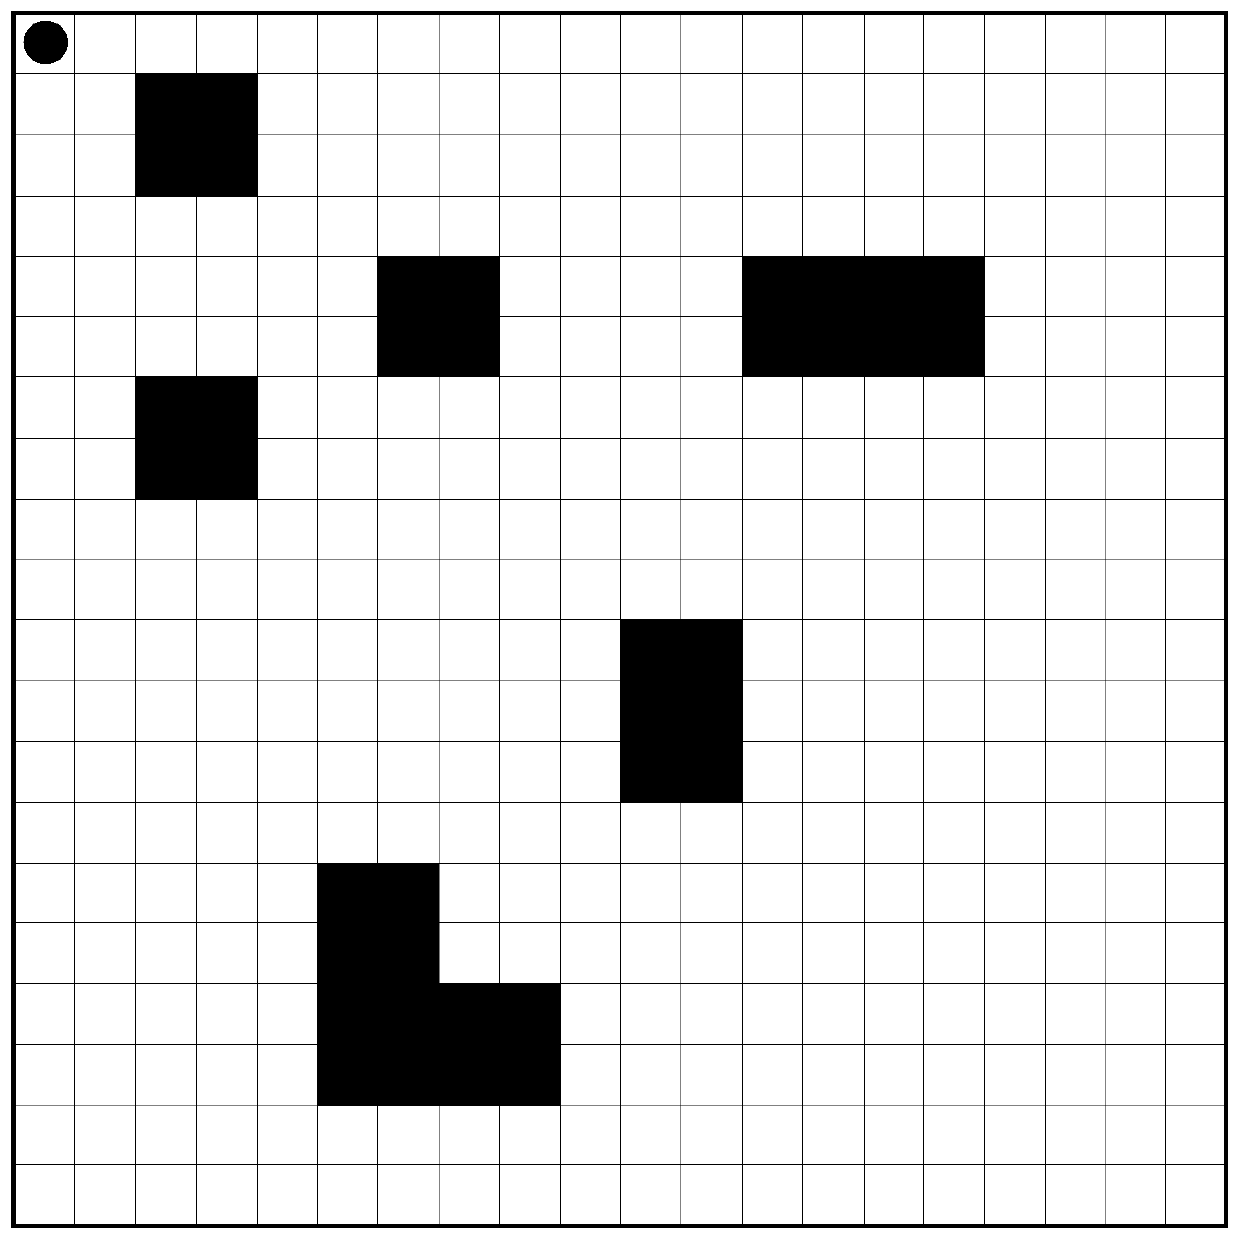 Full-traversal path planning method for sweeping robots based on grid method